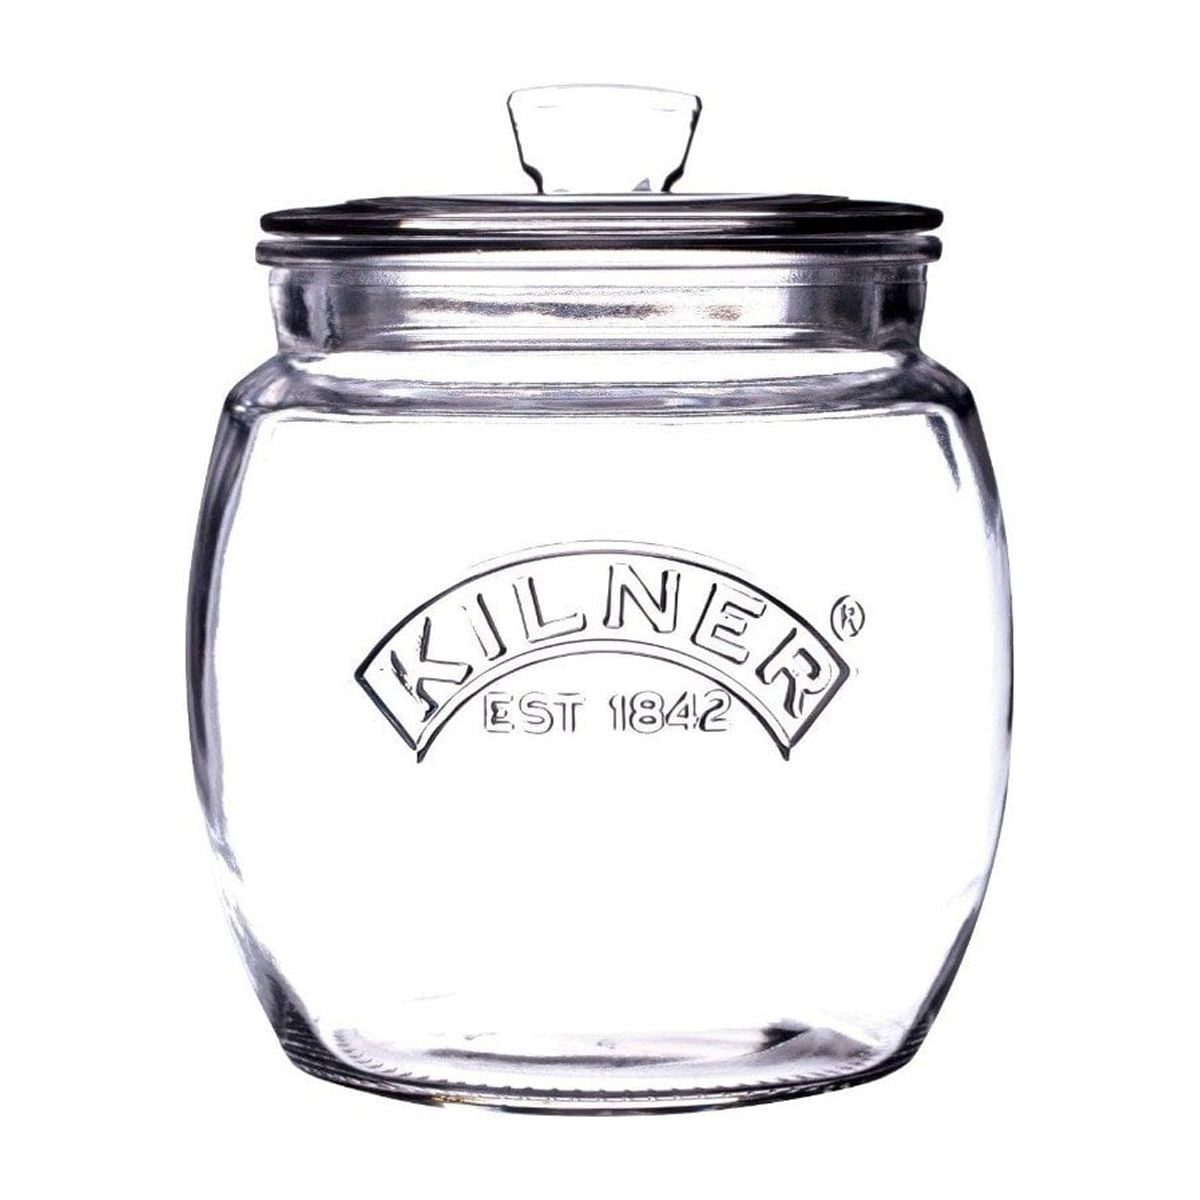 Winter Wonder Lane Glass Jar with Snowflake Lid, 16 Oz.